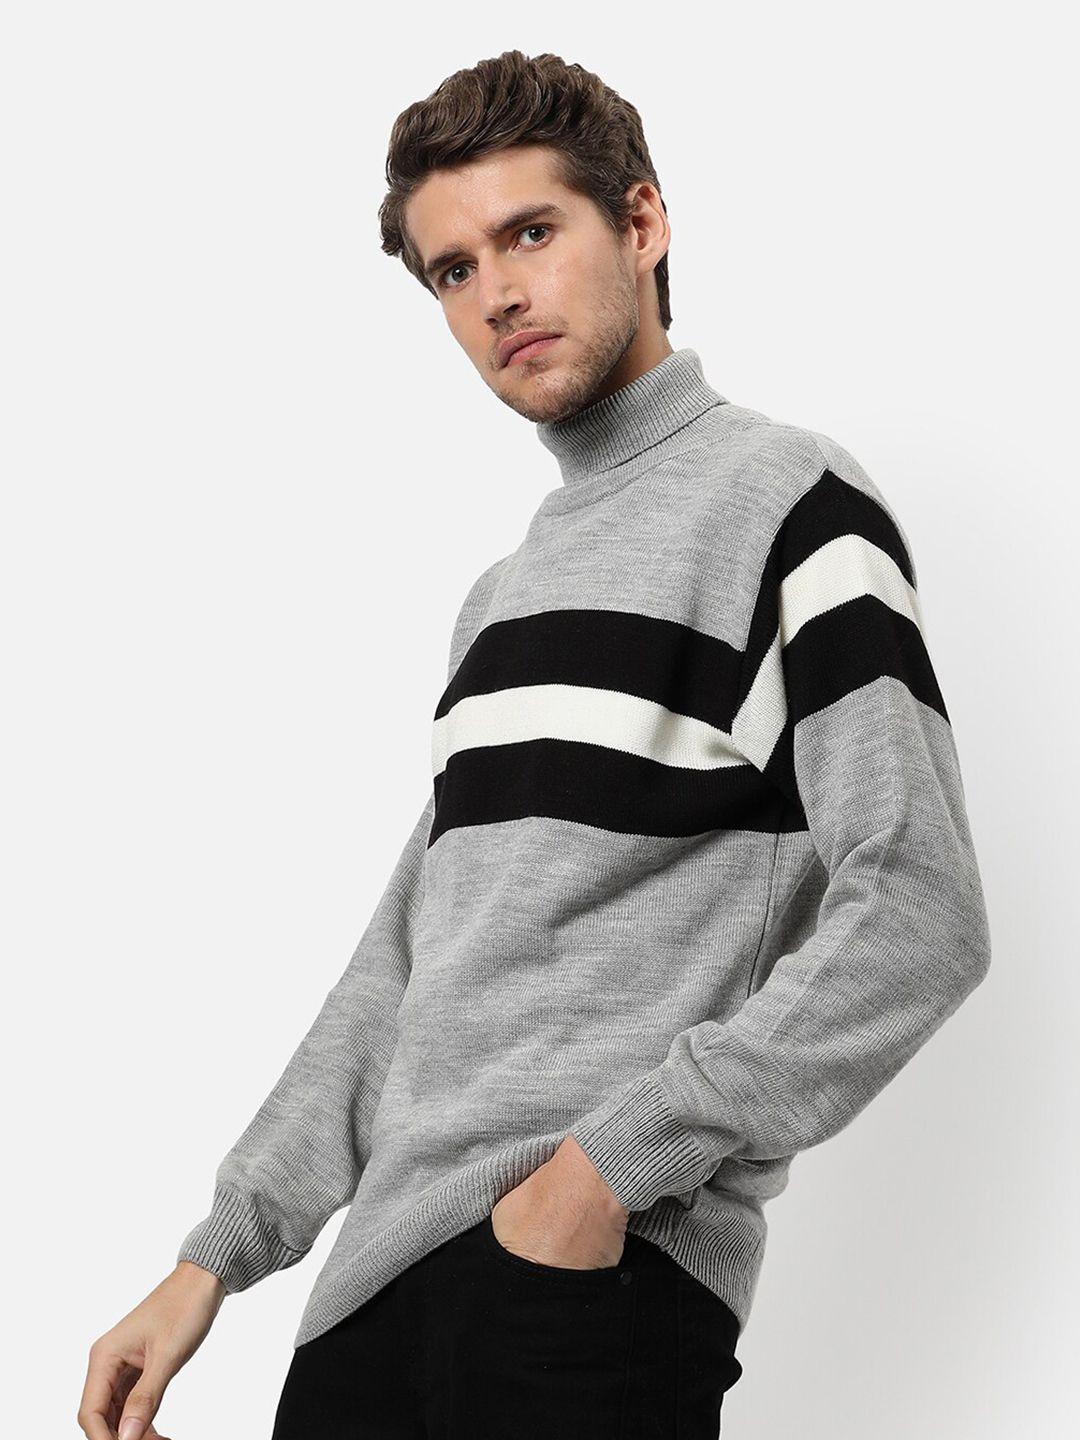 campus-sutra-men-grey-&-black-striped-pullover